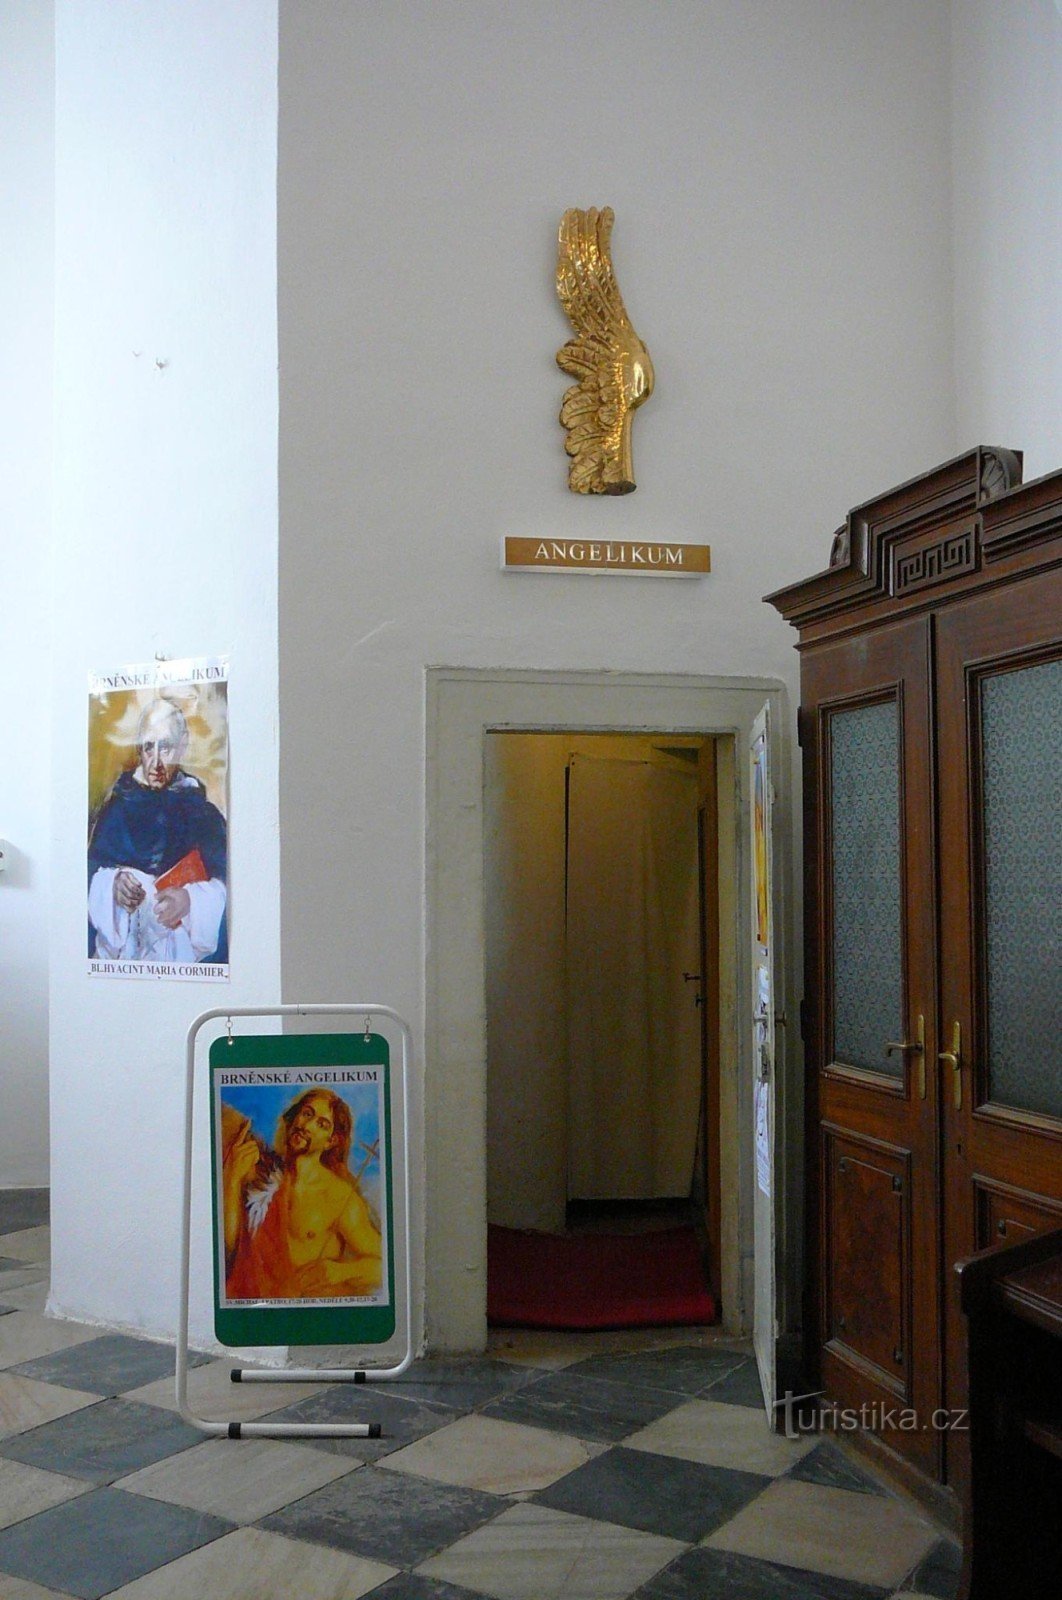 Entrance to Angelik